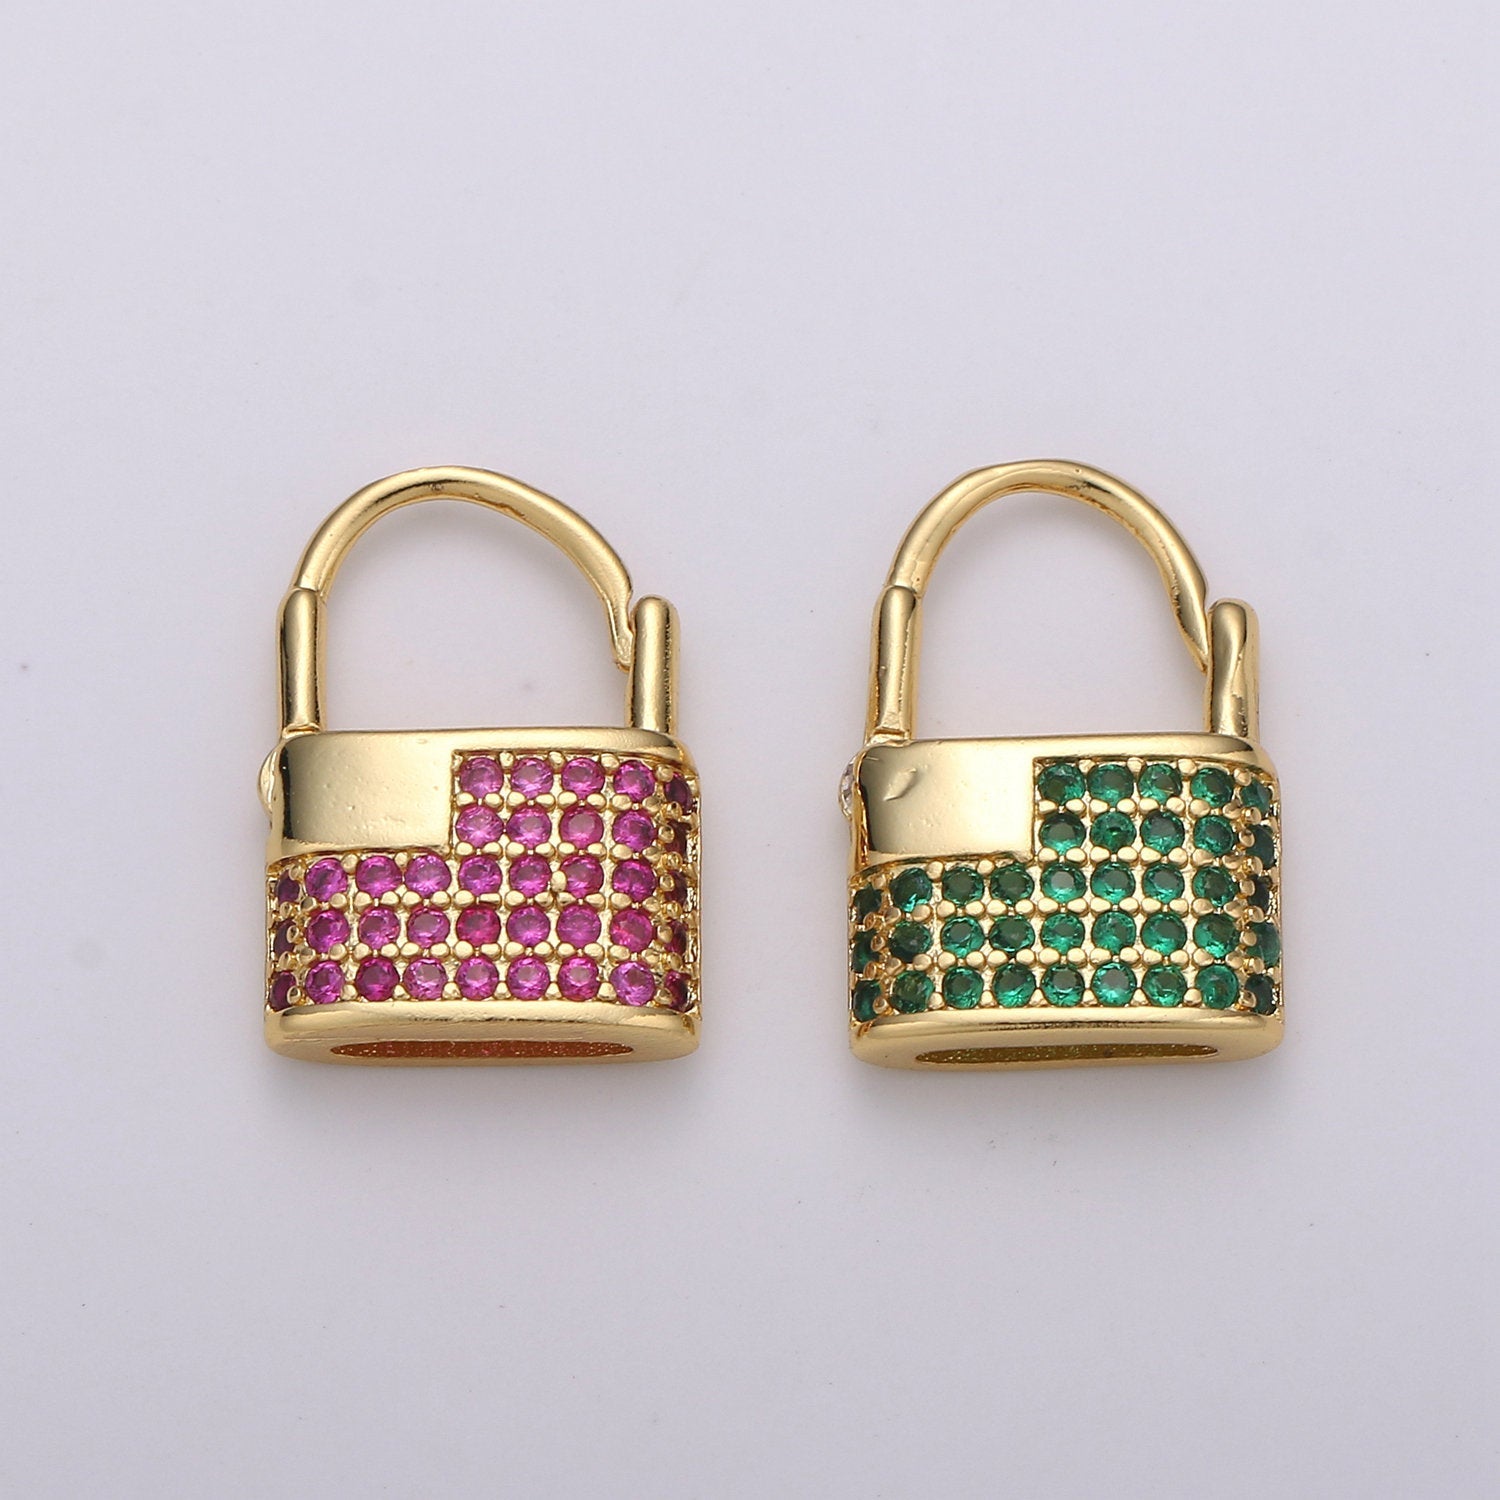 1 pair Padlock Earrings, Gold Lock Hoop Earring, Micro Pave Padlock Hoops, Gold Lock Earrings, Green Pink CZ Padlock Earring - DLUXCA